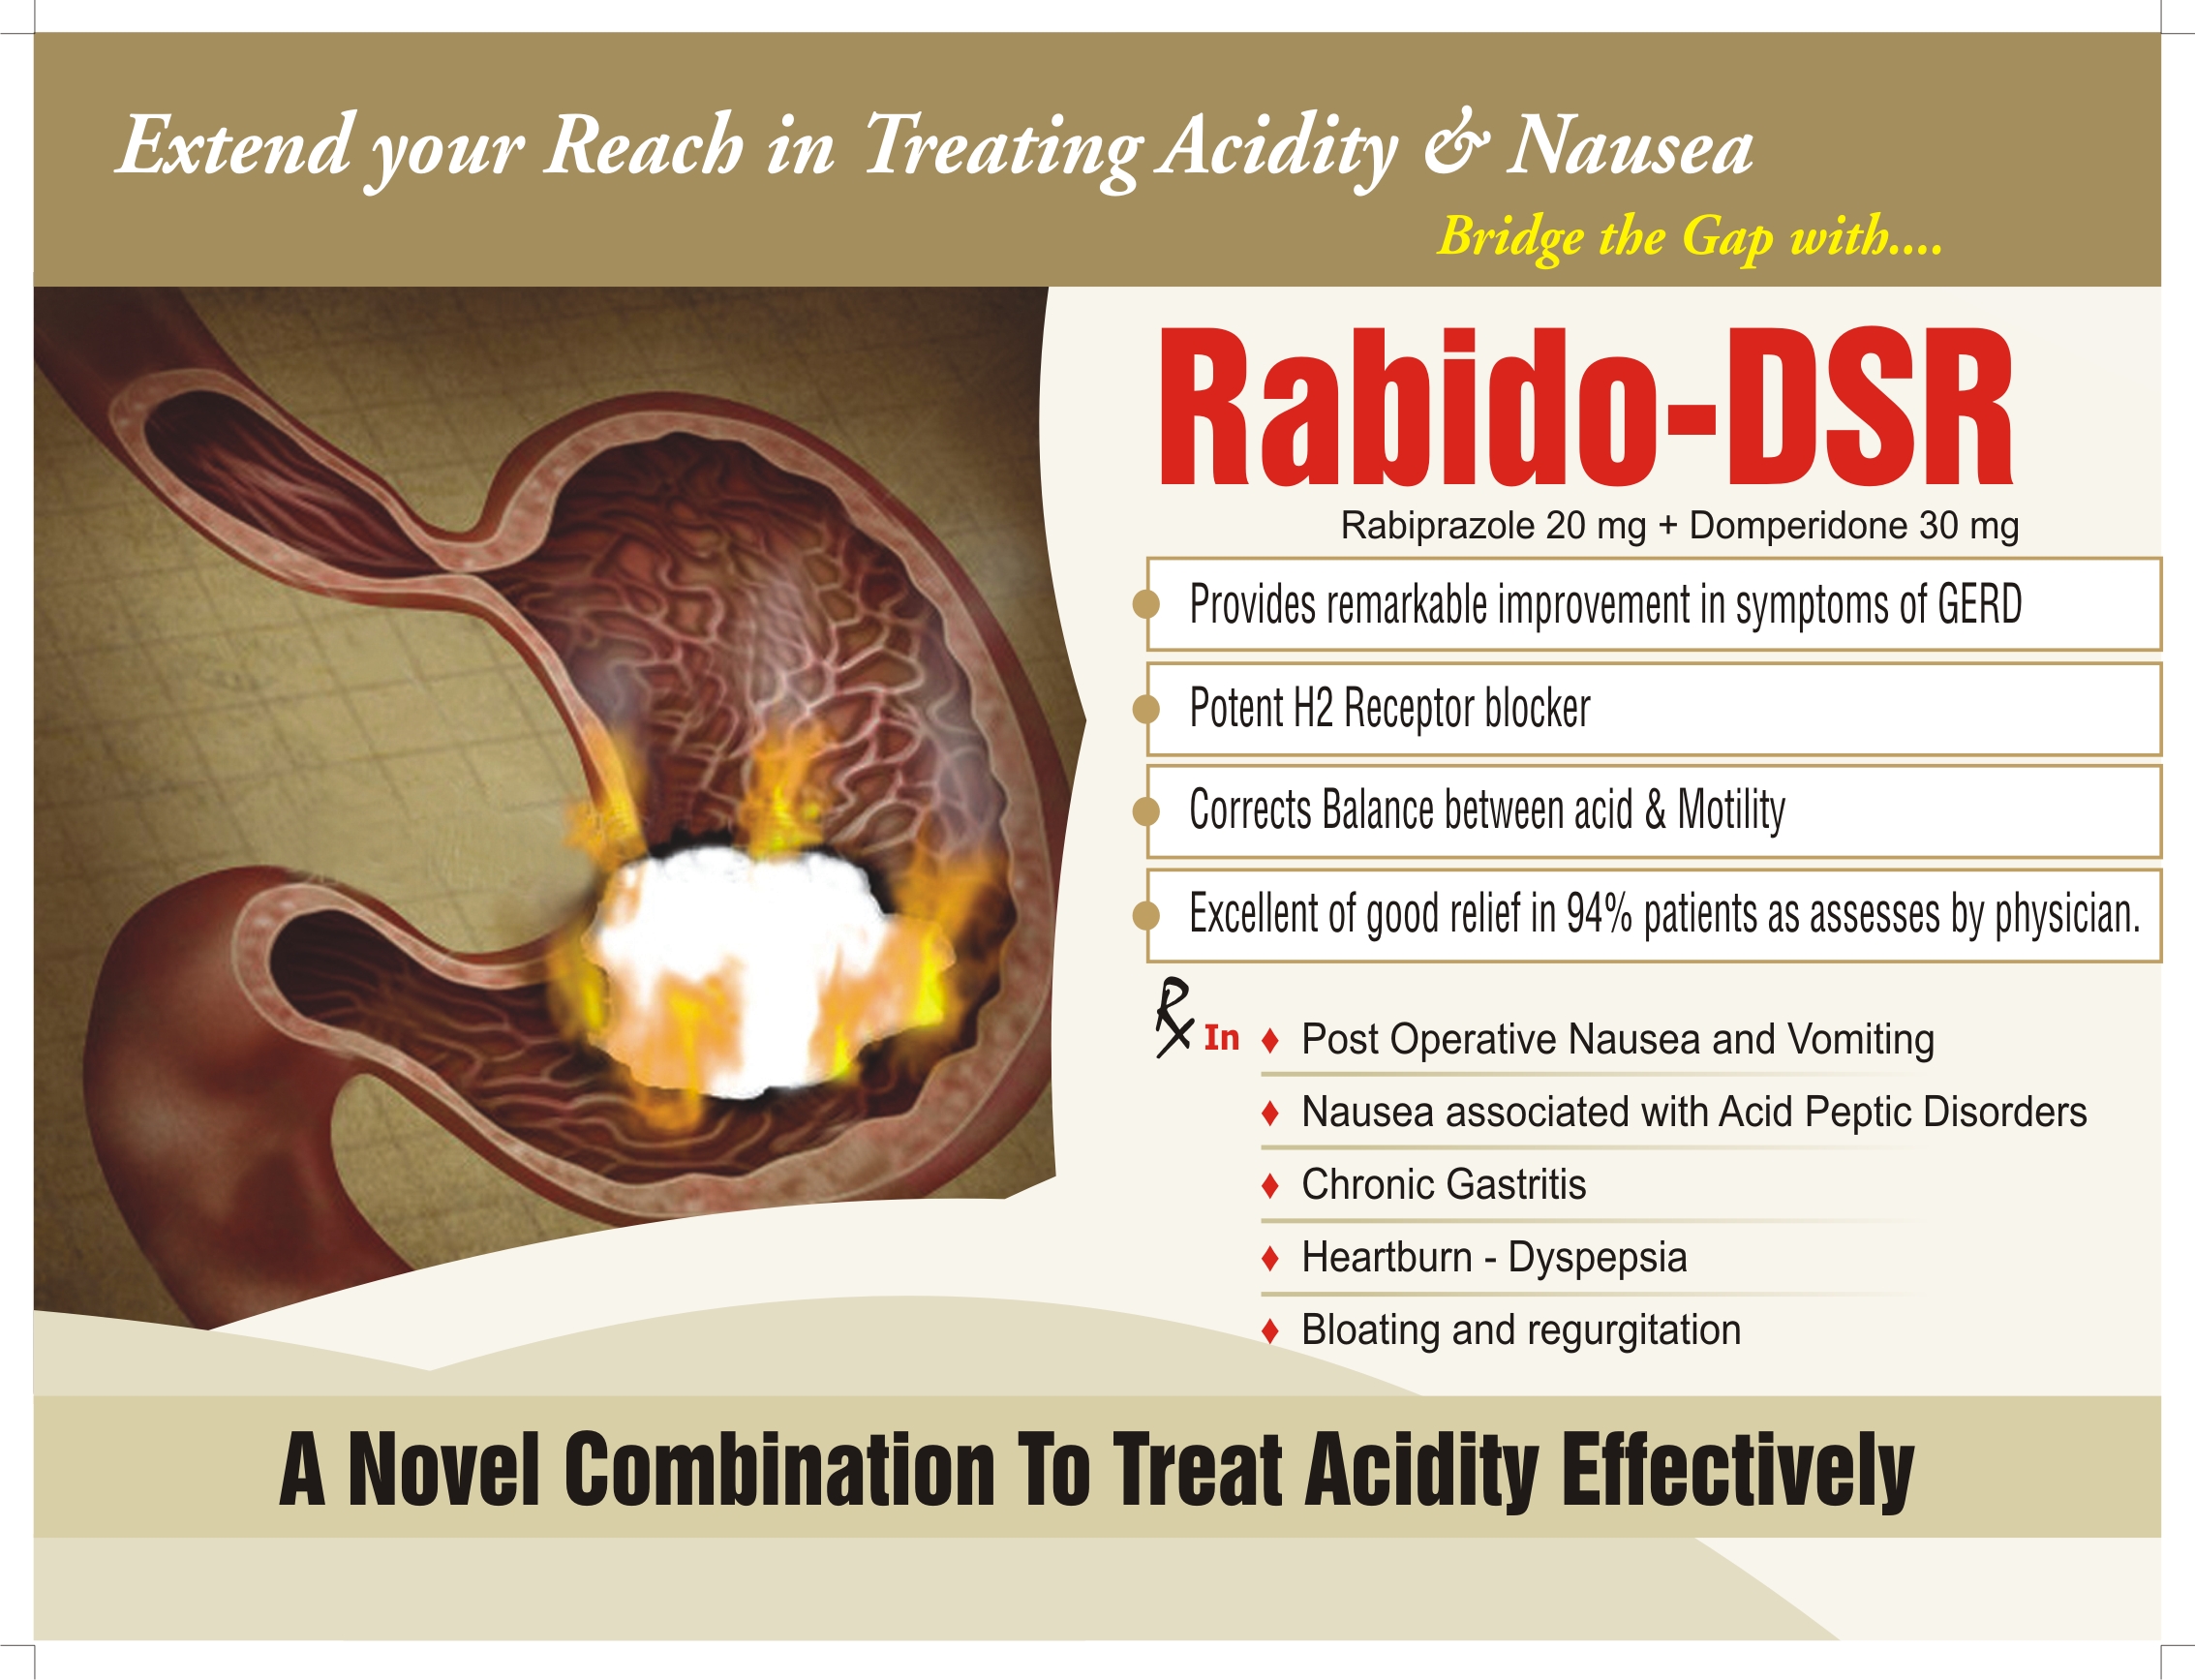 Rabido-DSR